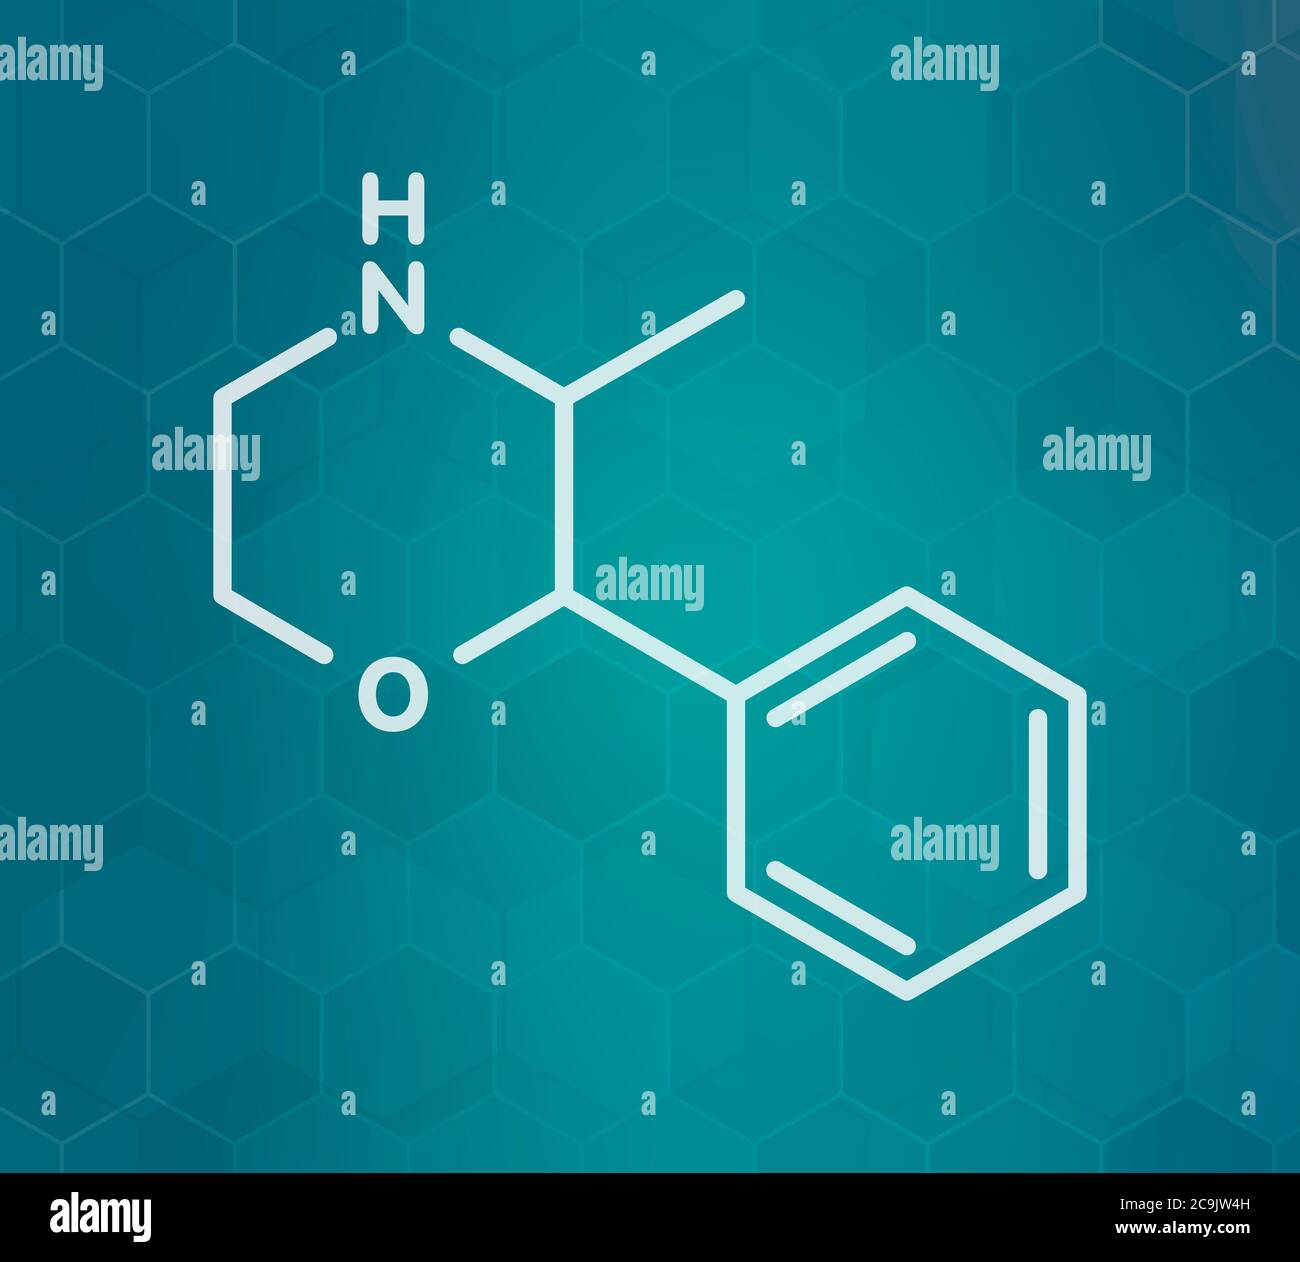 Phenmetrazine stimulant drug molecule (amphetamine class). Used as stimulant and appetite suppressant. White skeletal formula on dark teal gradient ba Stock Photo